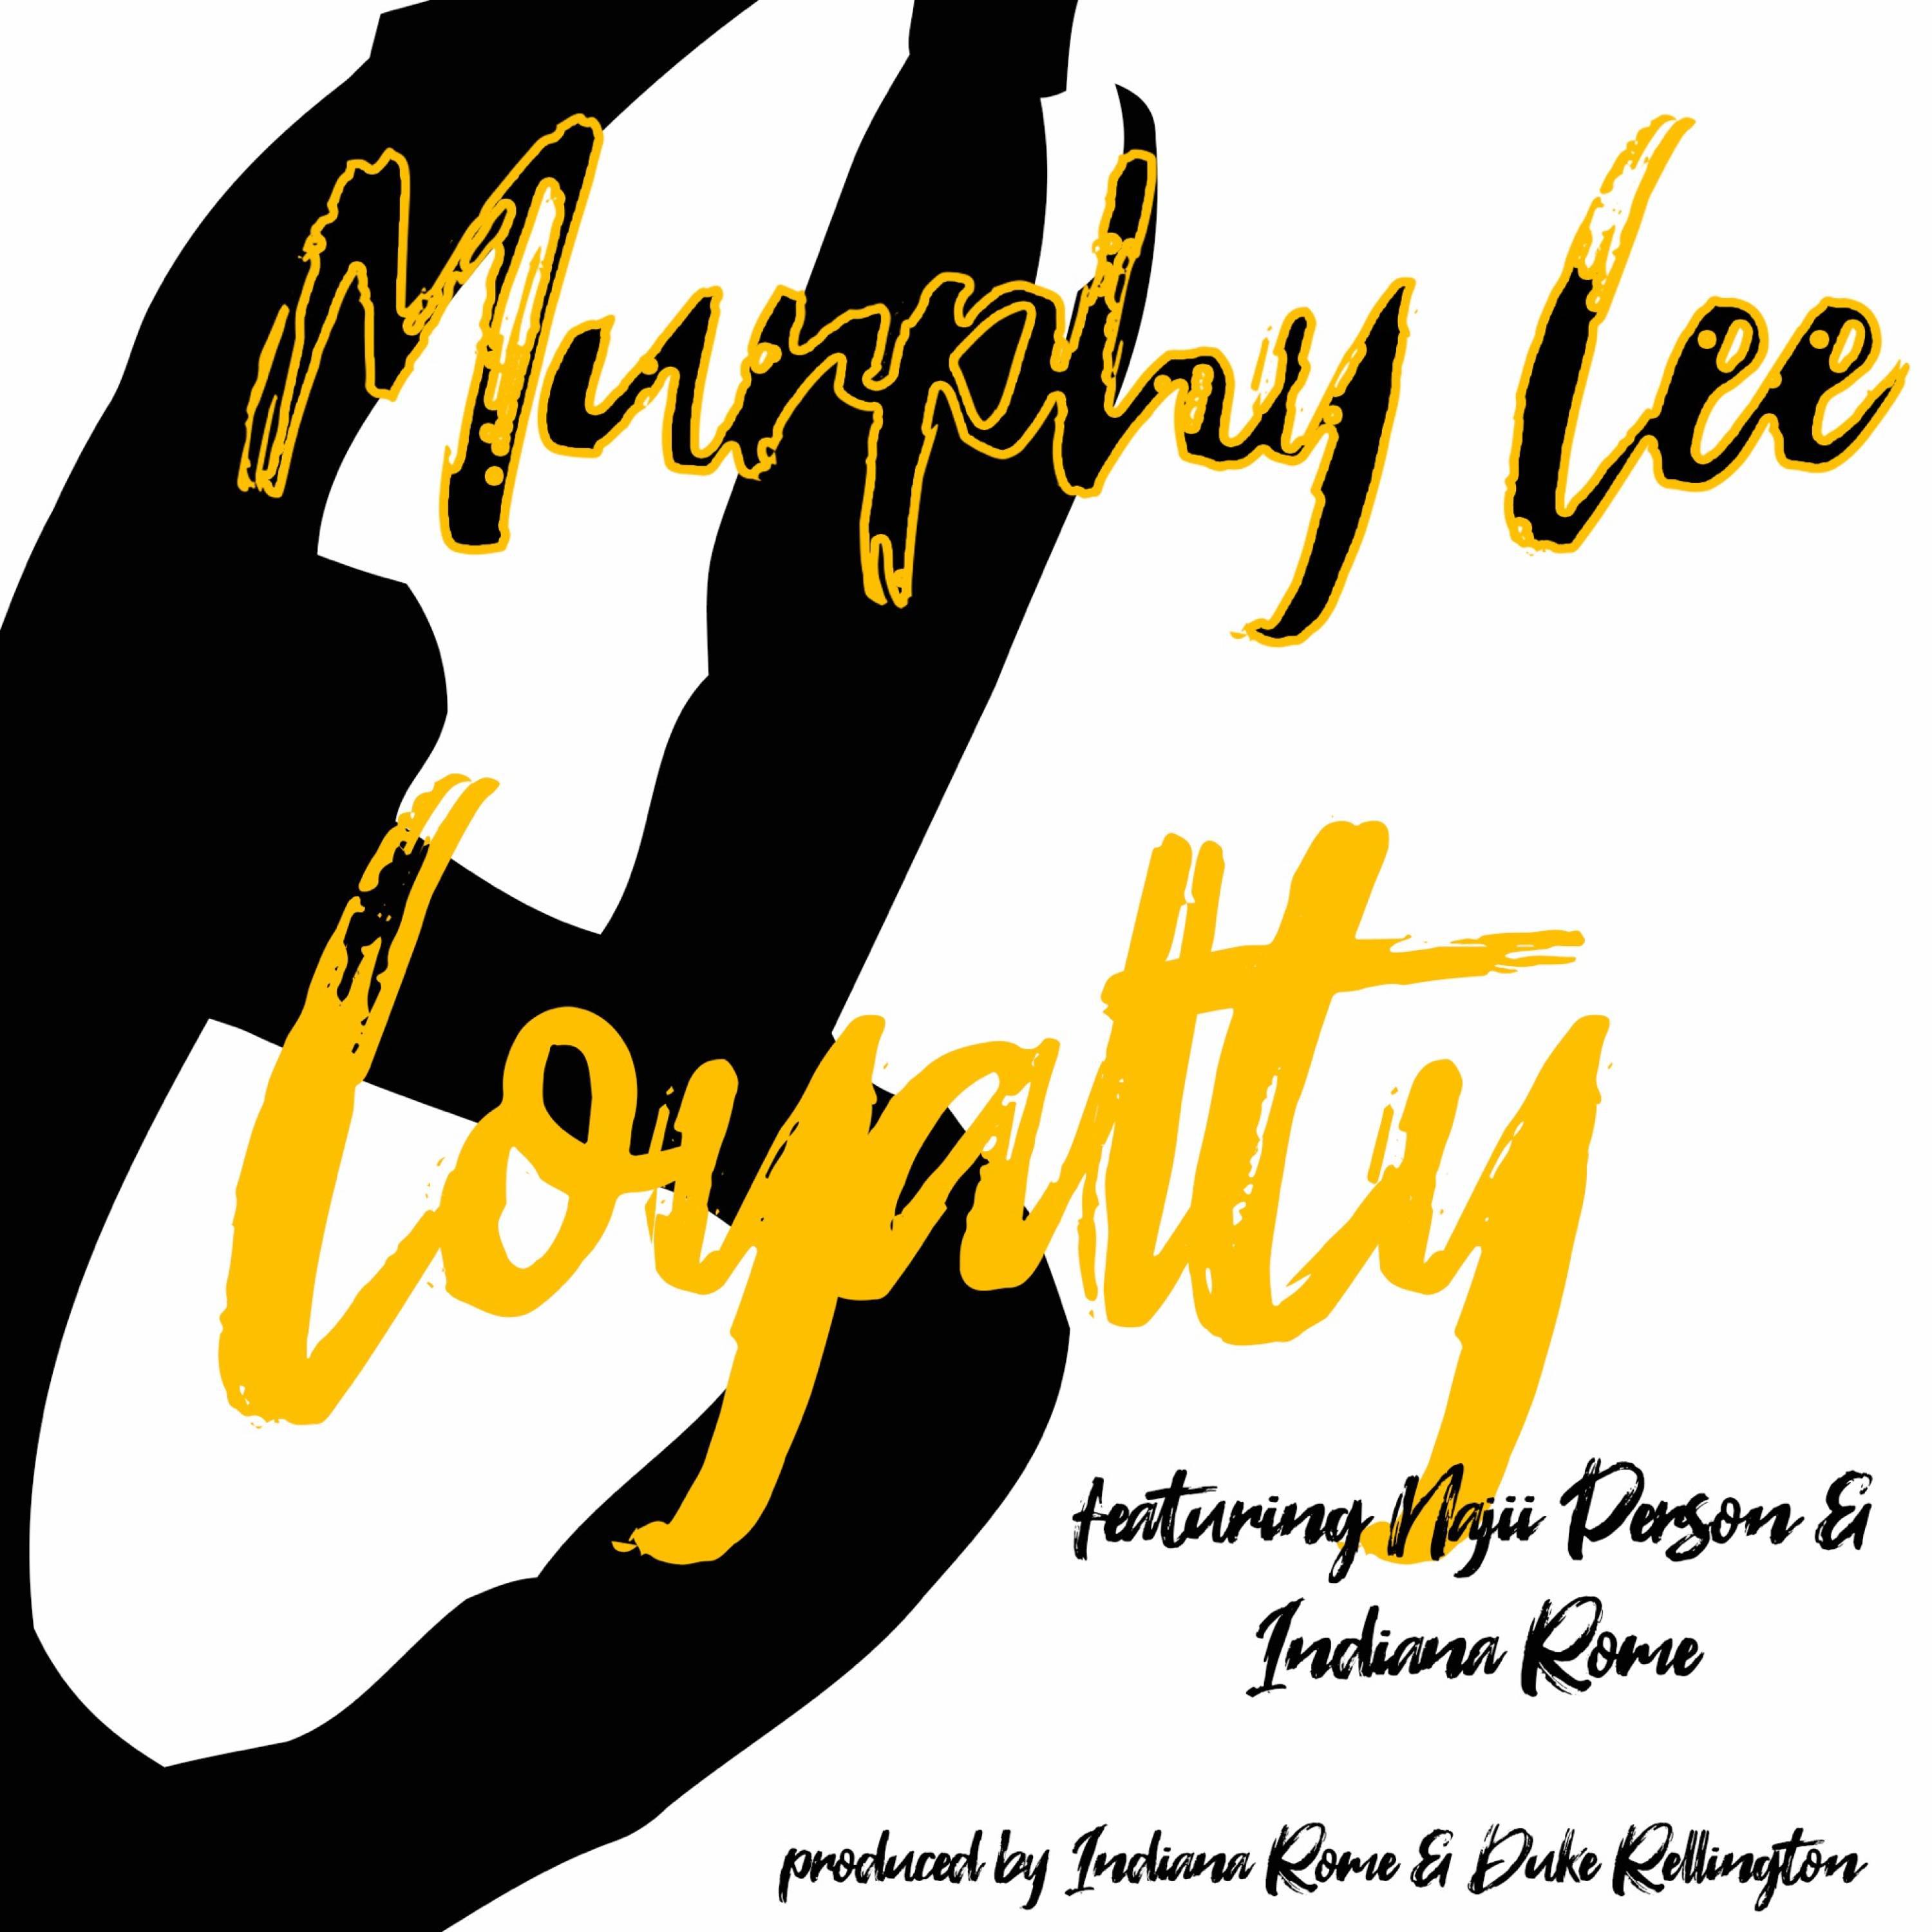 Murphy Lee - Loyalty (feat. Najii Person & Indiana Rome)